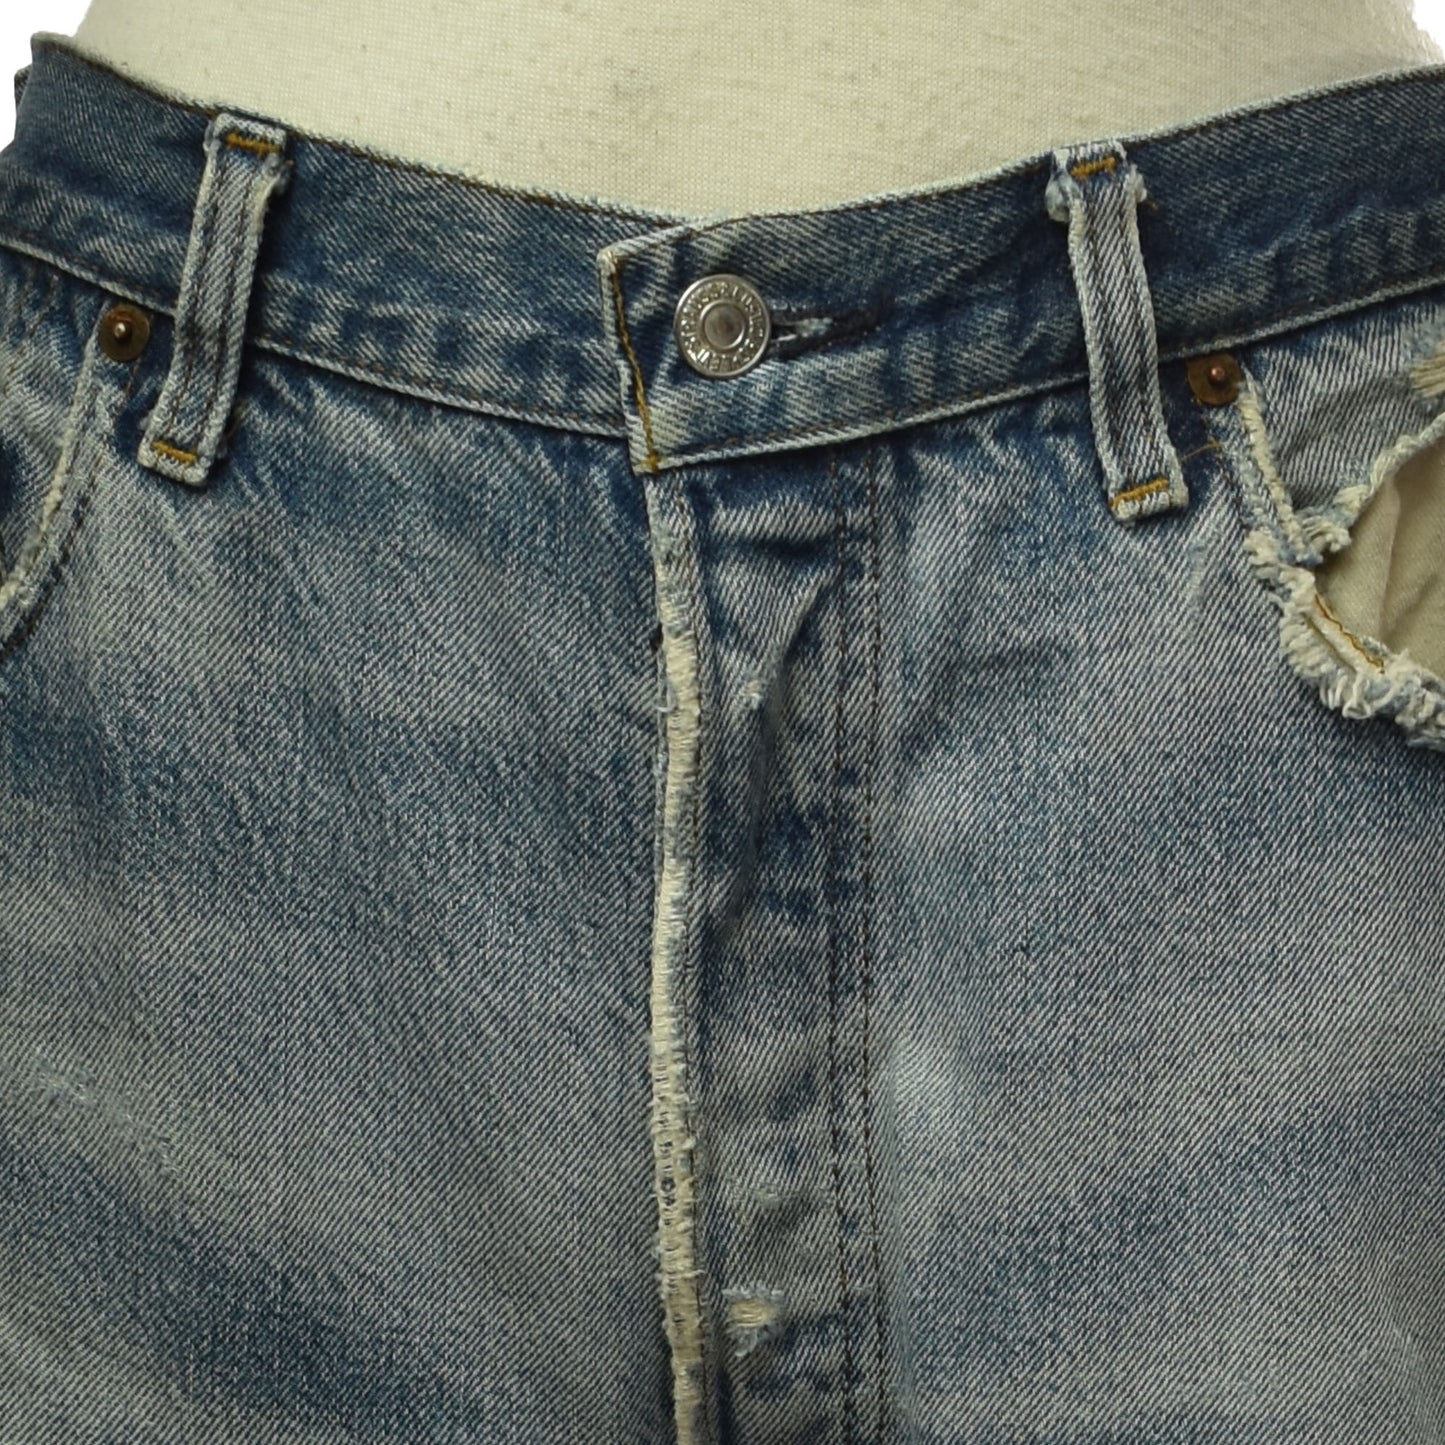 Vintage 90s Levi's 501 Redline Selvedge Jeans - Light Wash Button Fly